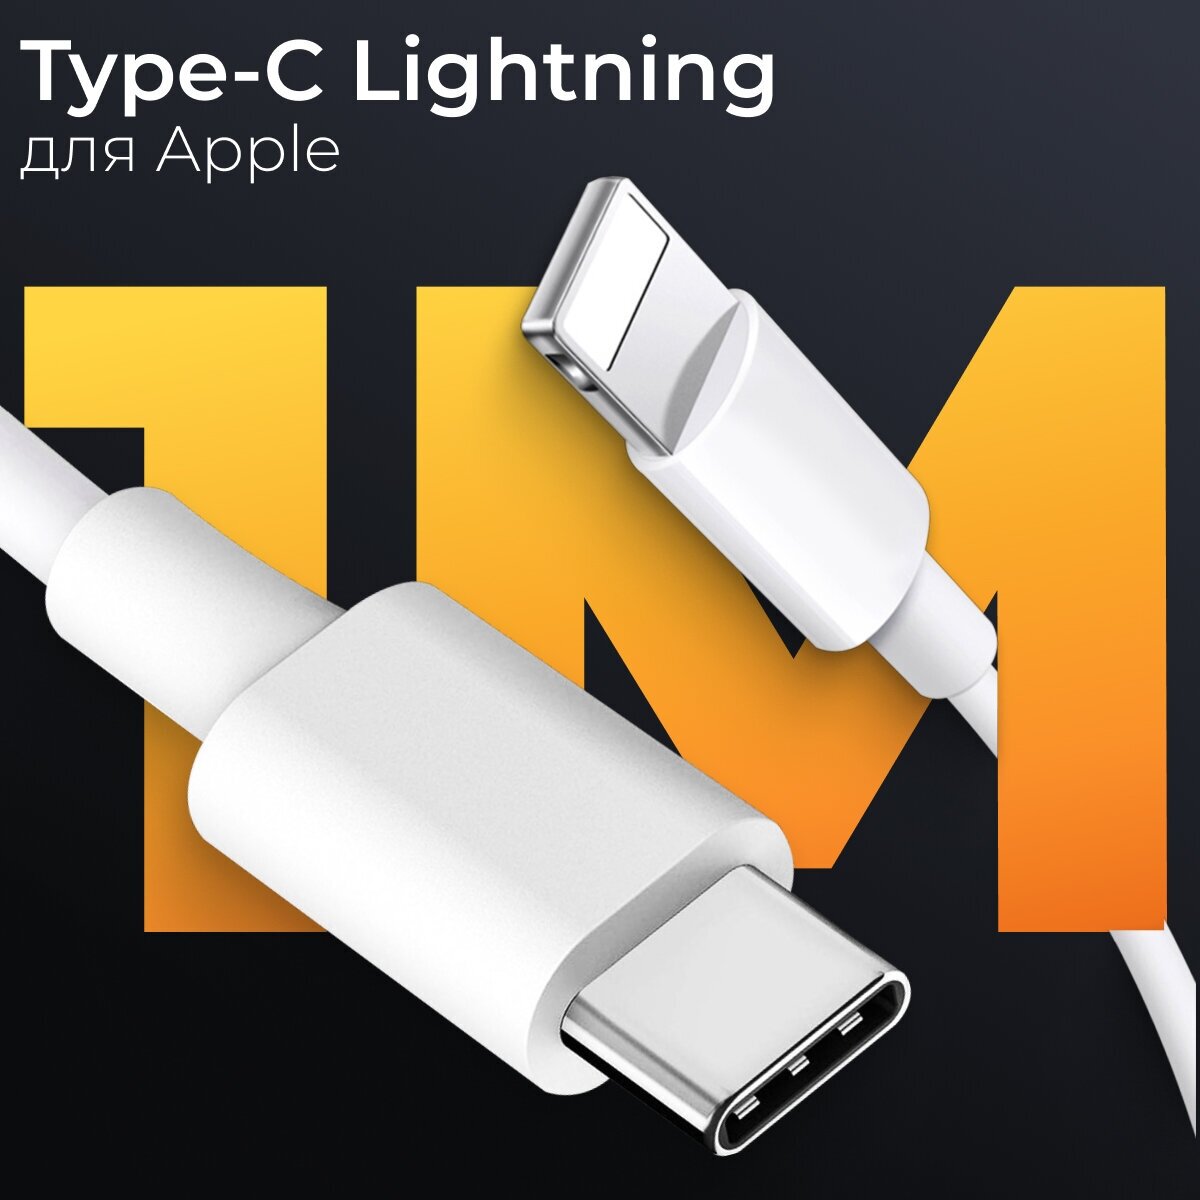 Кабель USB Type-C Lightning (1 метр) для Apple iPhone iPad AirPods / Провод для зарядки / Шнур ЮСБ Тайп С Лайтнинг для зарядного устройства / Белый